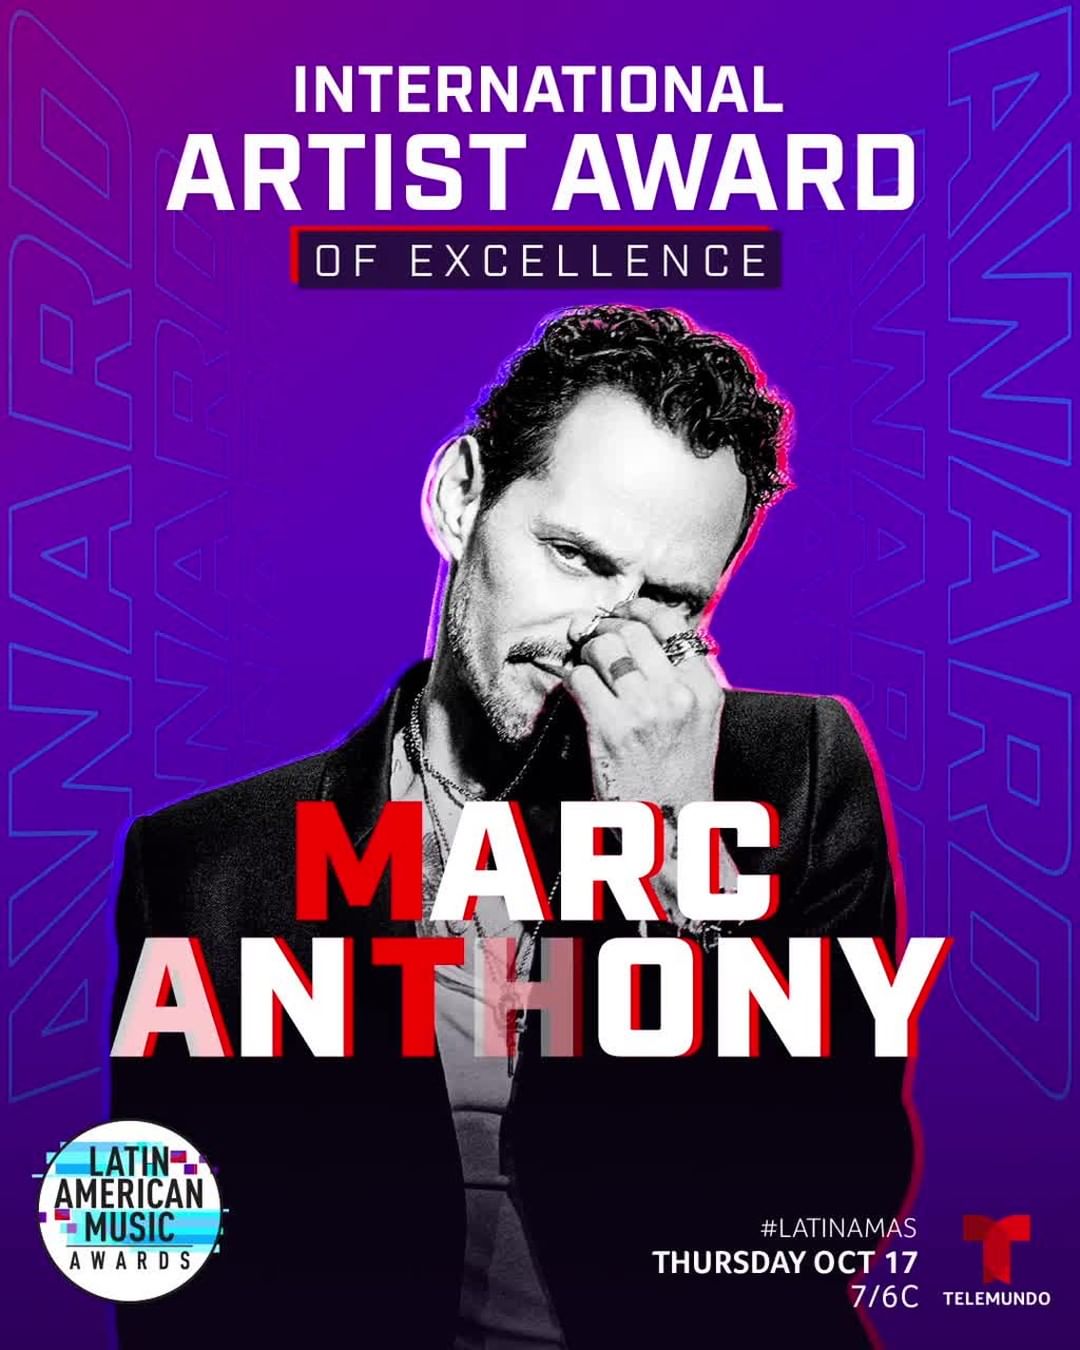 Photo of Marc Anthony recibirá premio “Artista Internacional de la Excelencia” en Latin American Music Awards